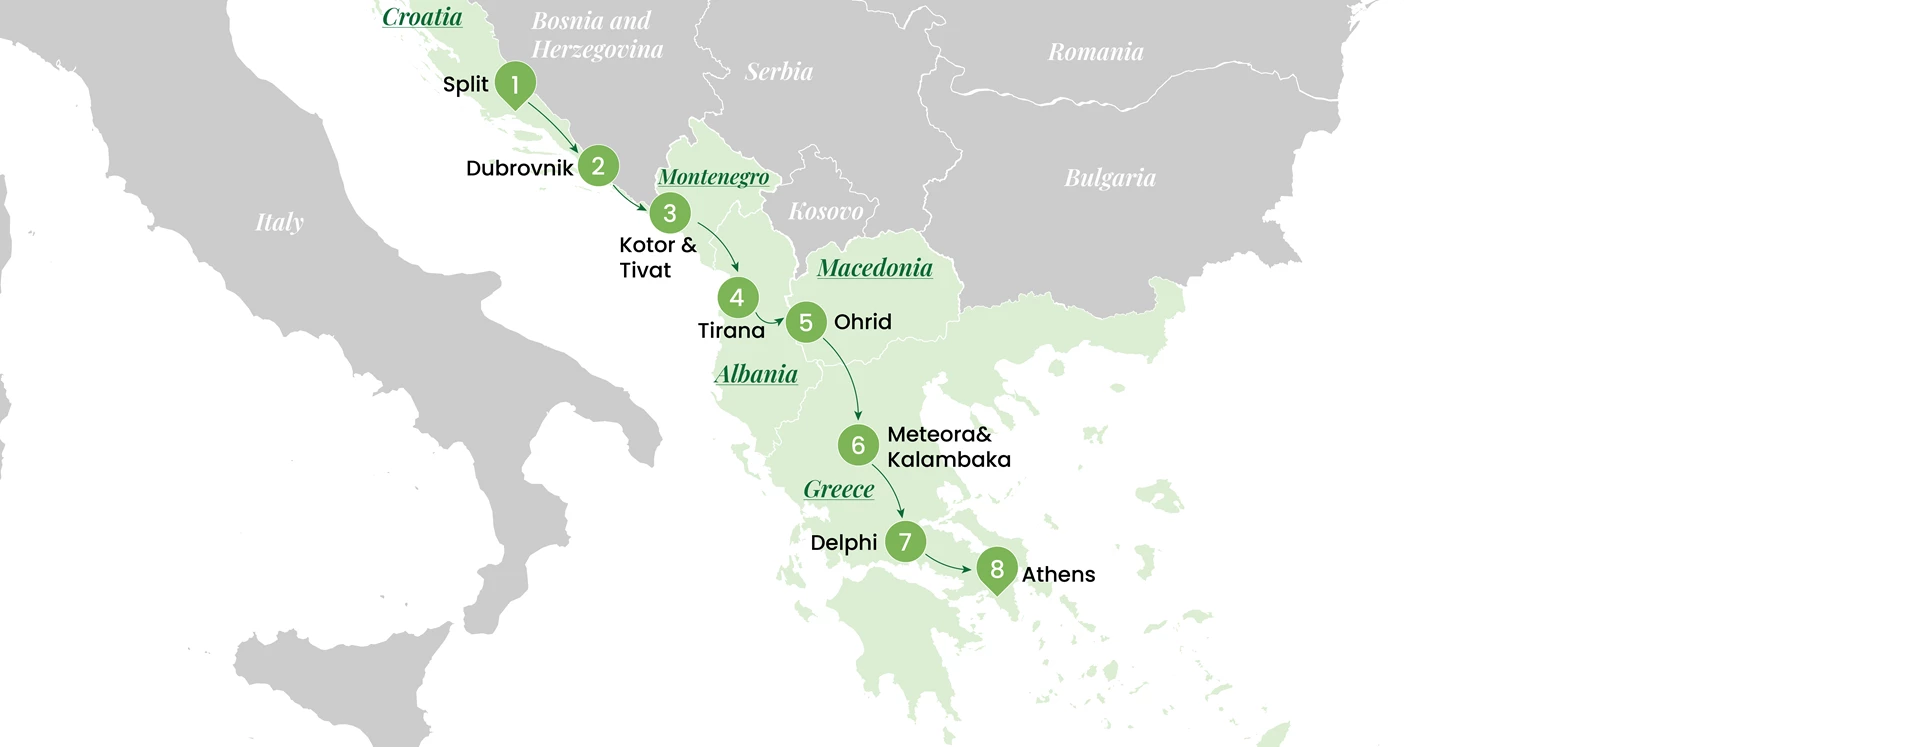 Adriatic to Aegean: From Croatia to Macedonia  and Greece